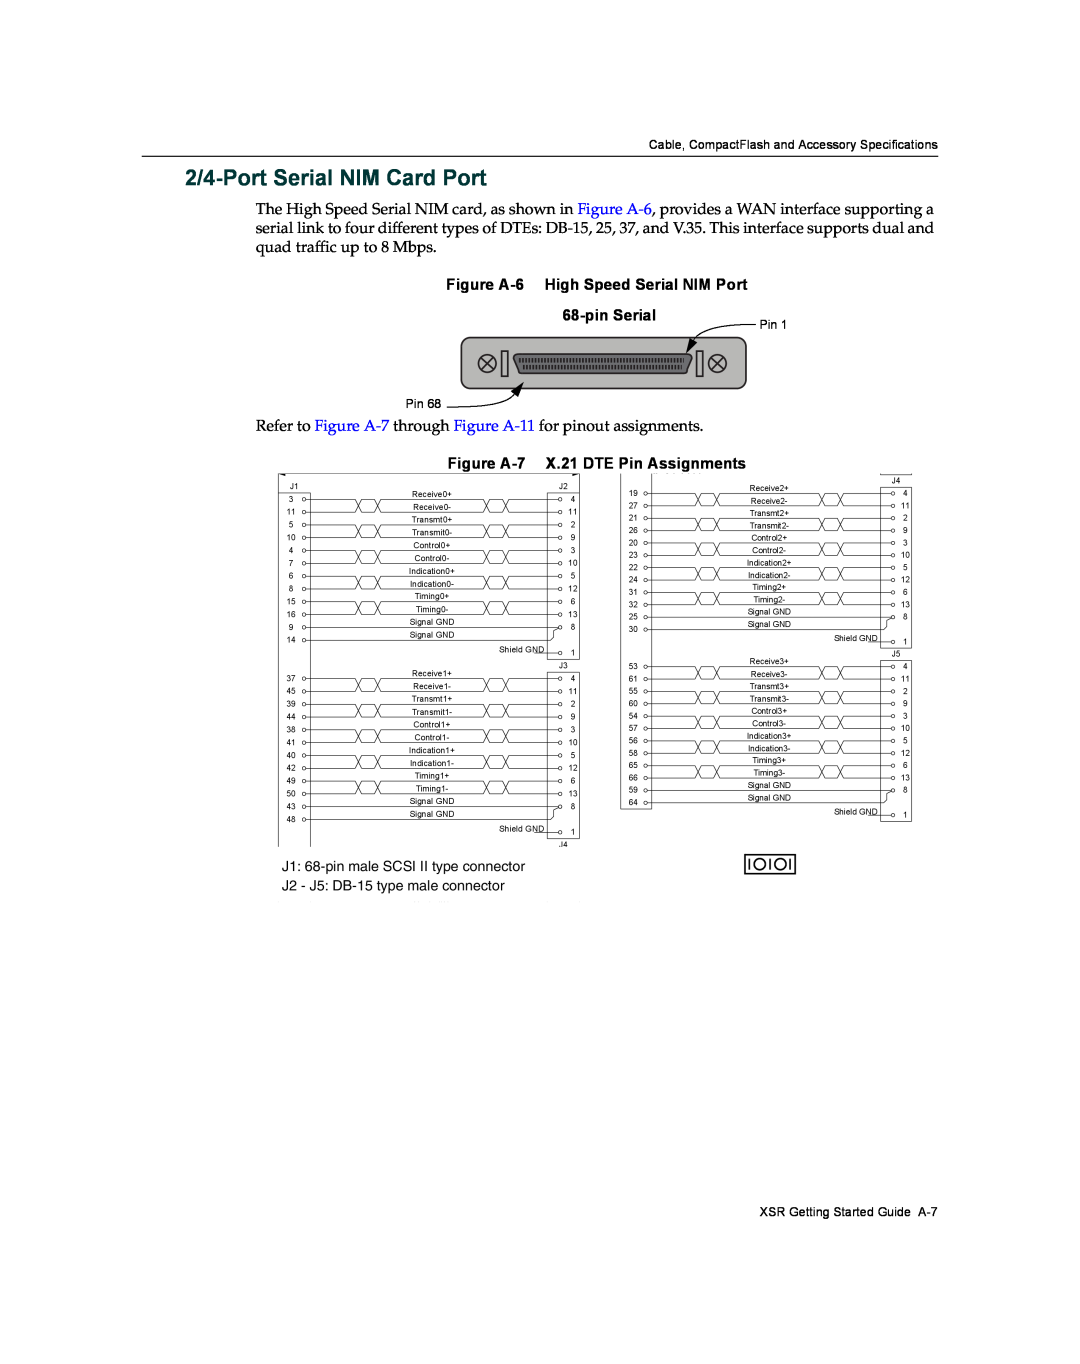 Enterasys Networks XSR-3020 2/4-Port Serial NIM Card Port, Figure A-6 High Speed Serial NIM Port, pin Serial, Figure A-7 